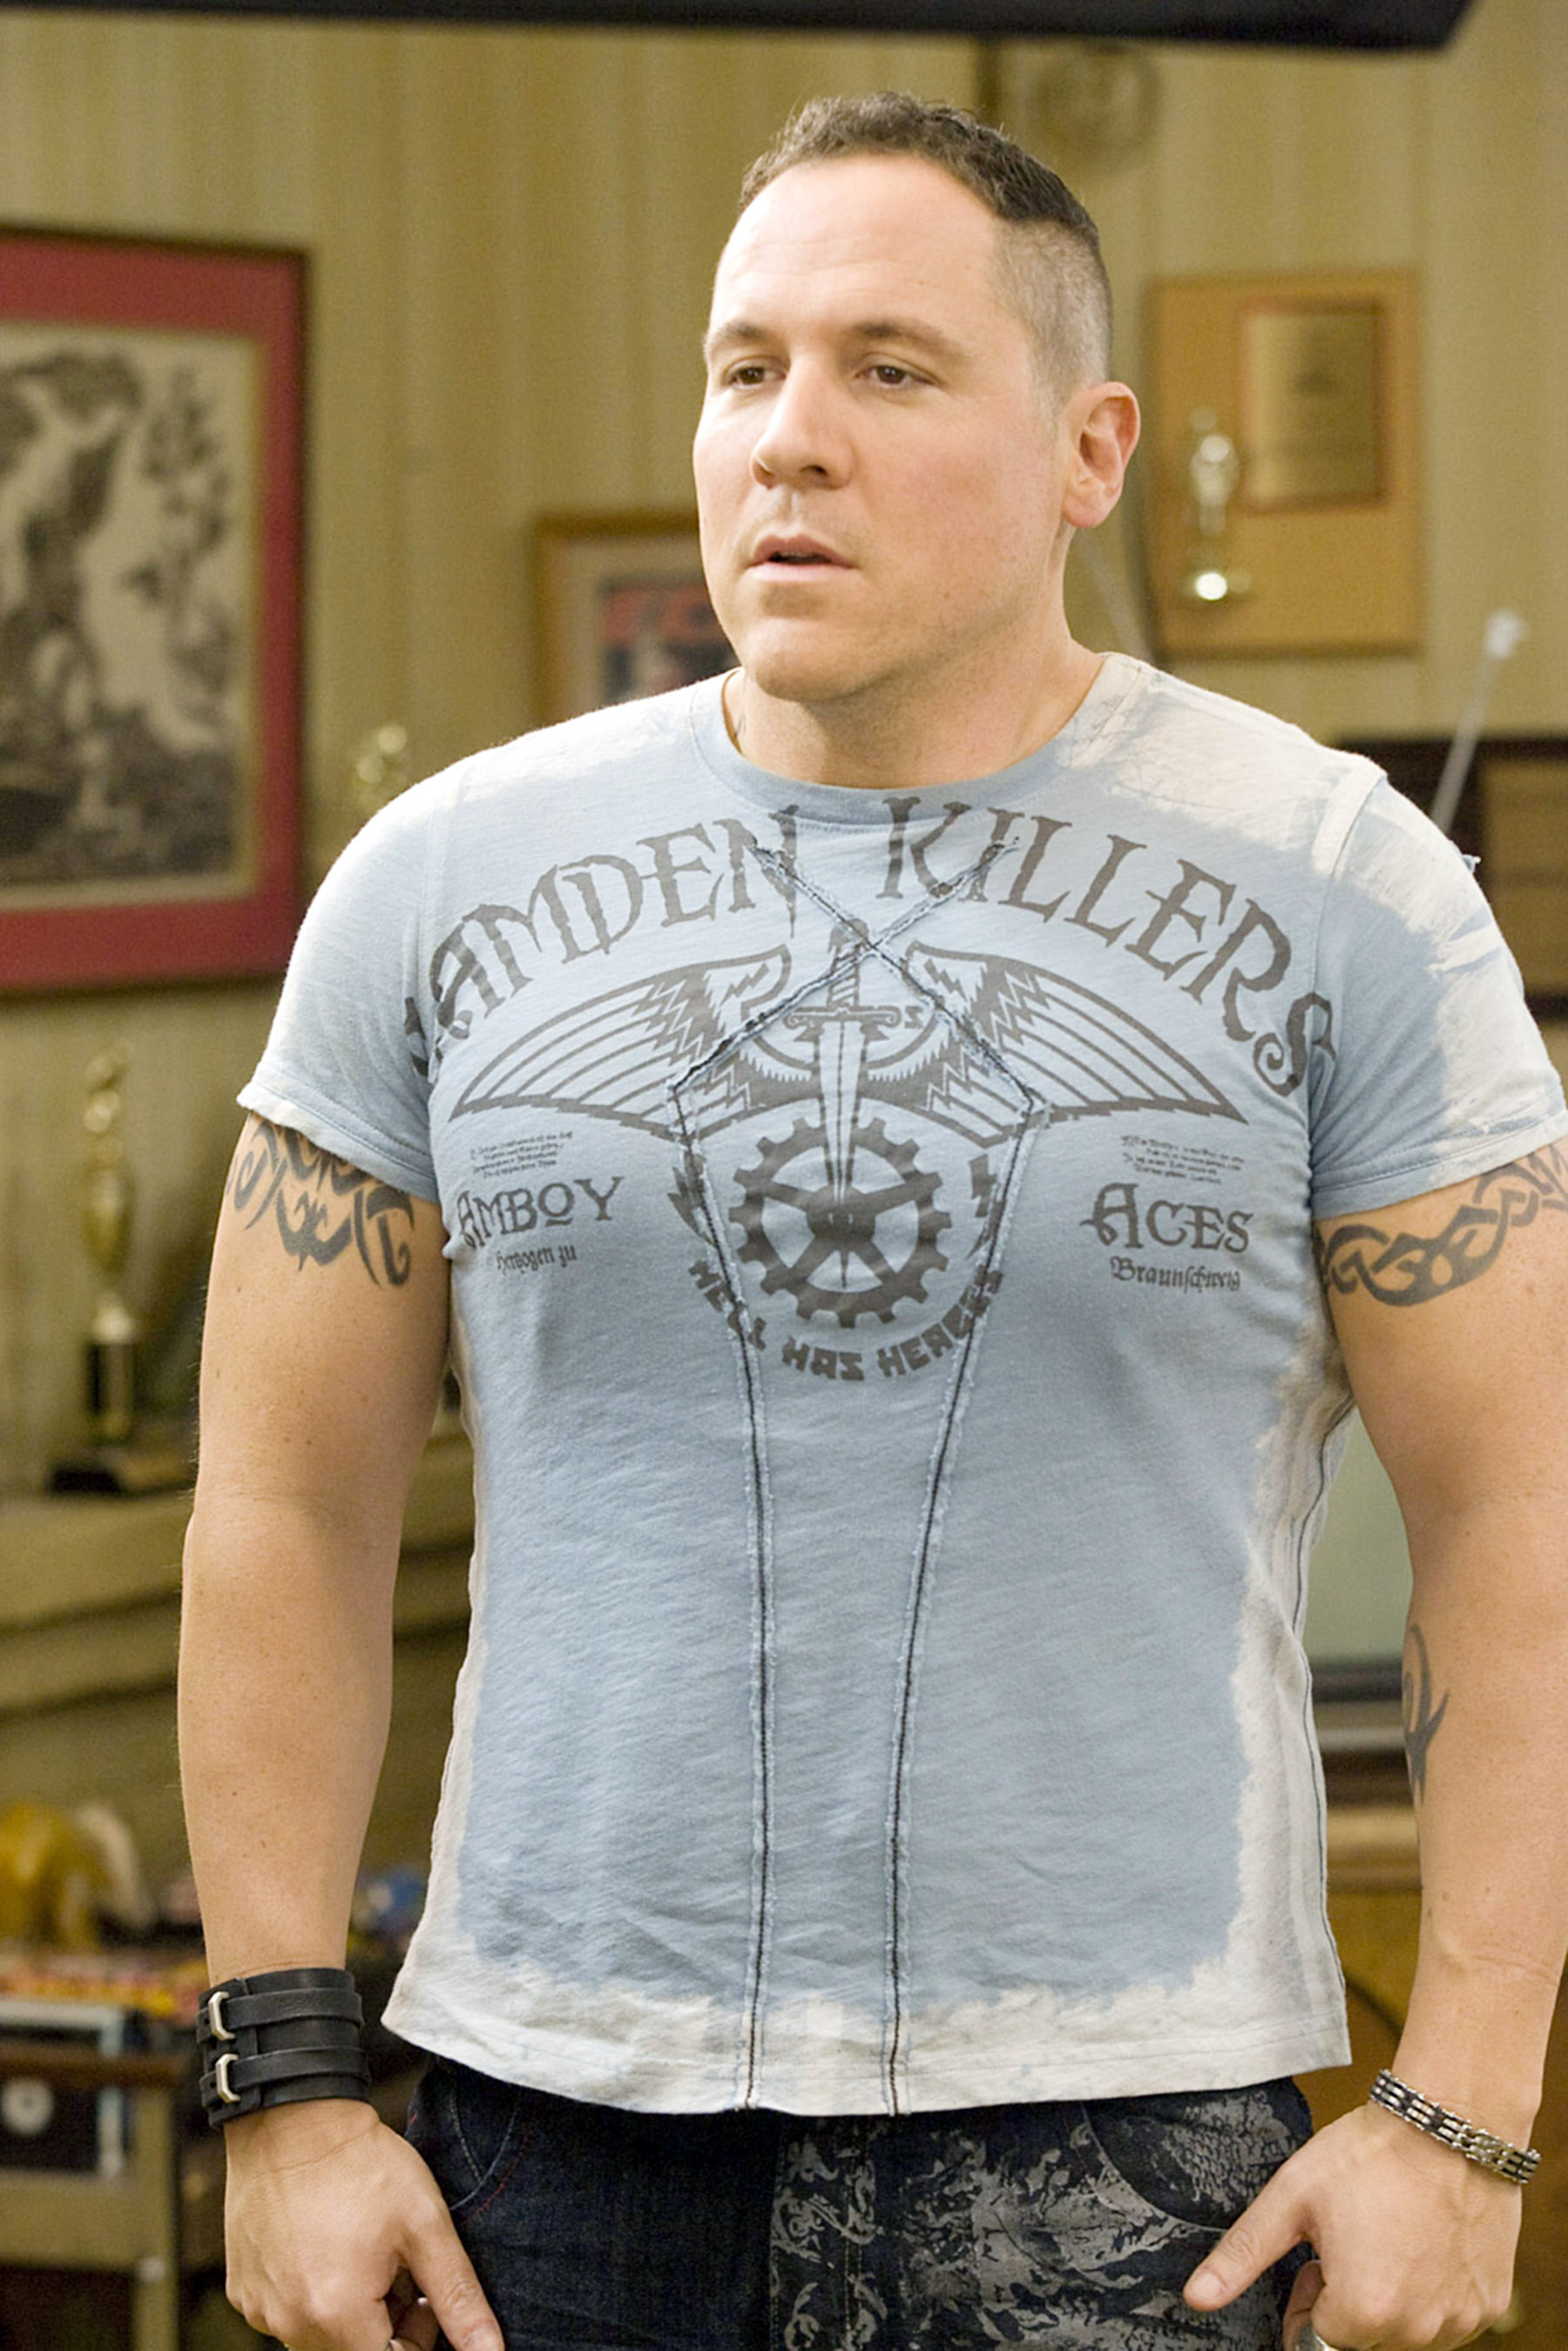 Jon in a short-sleeved T-shirt